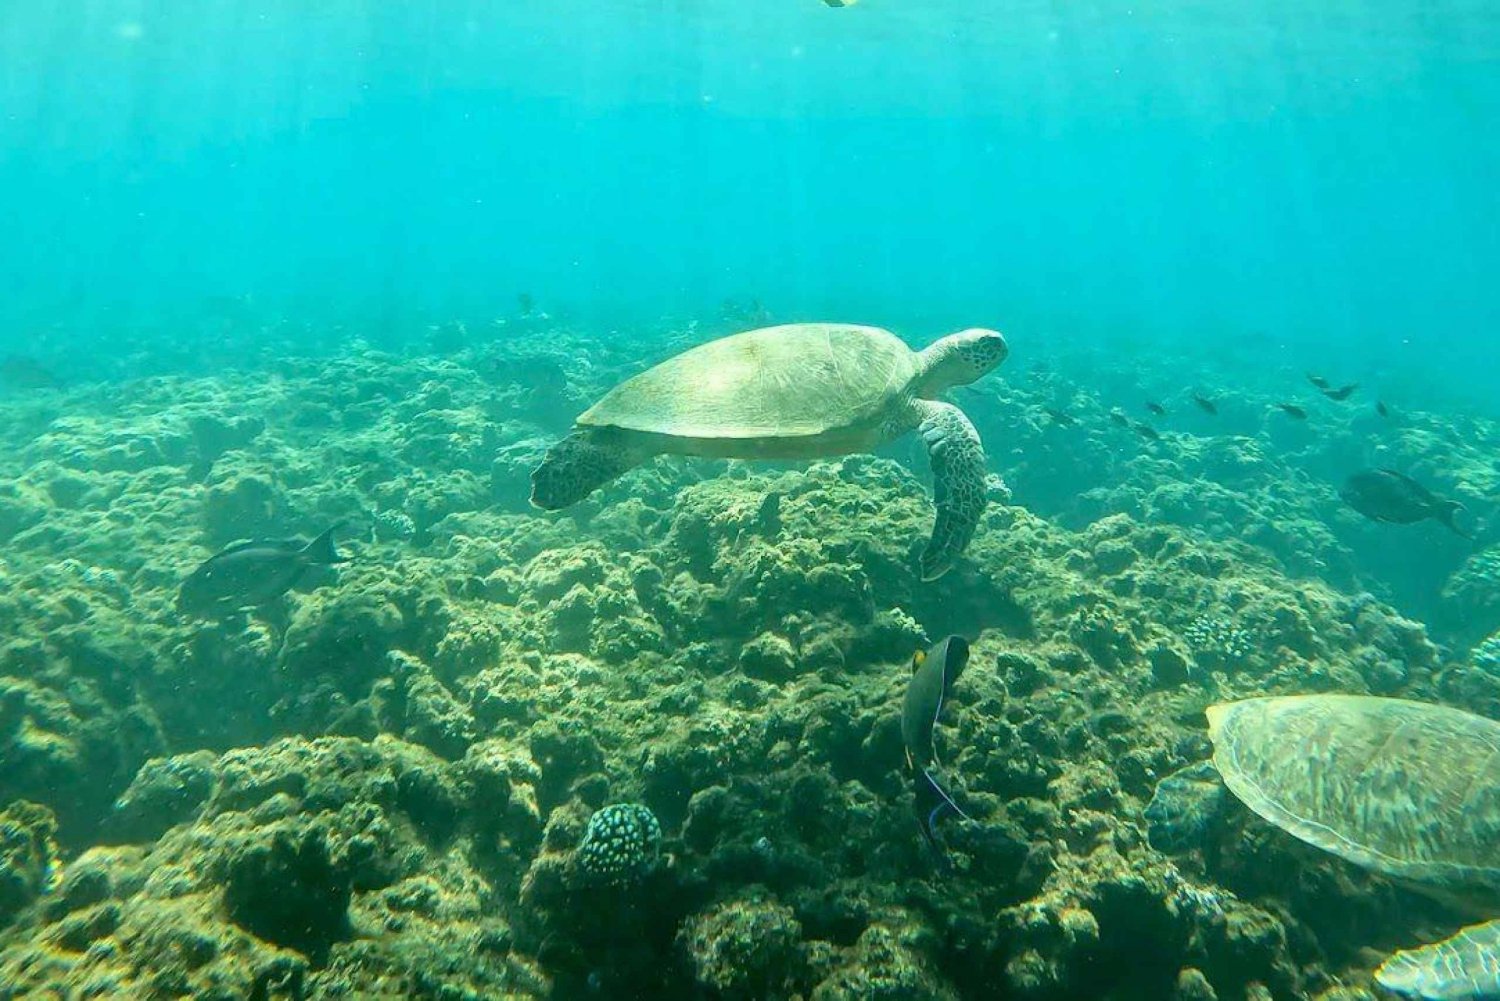 Muscat: gita di snorkeling alle isole Dimaniat